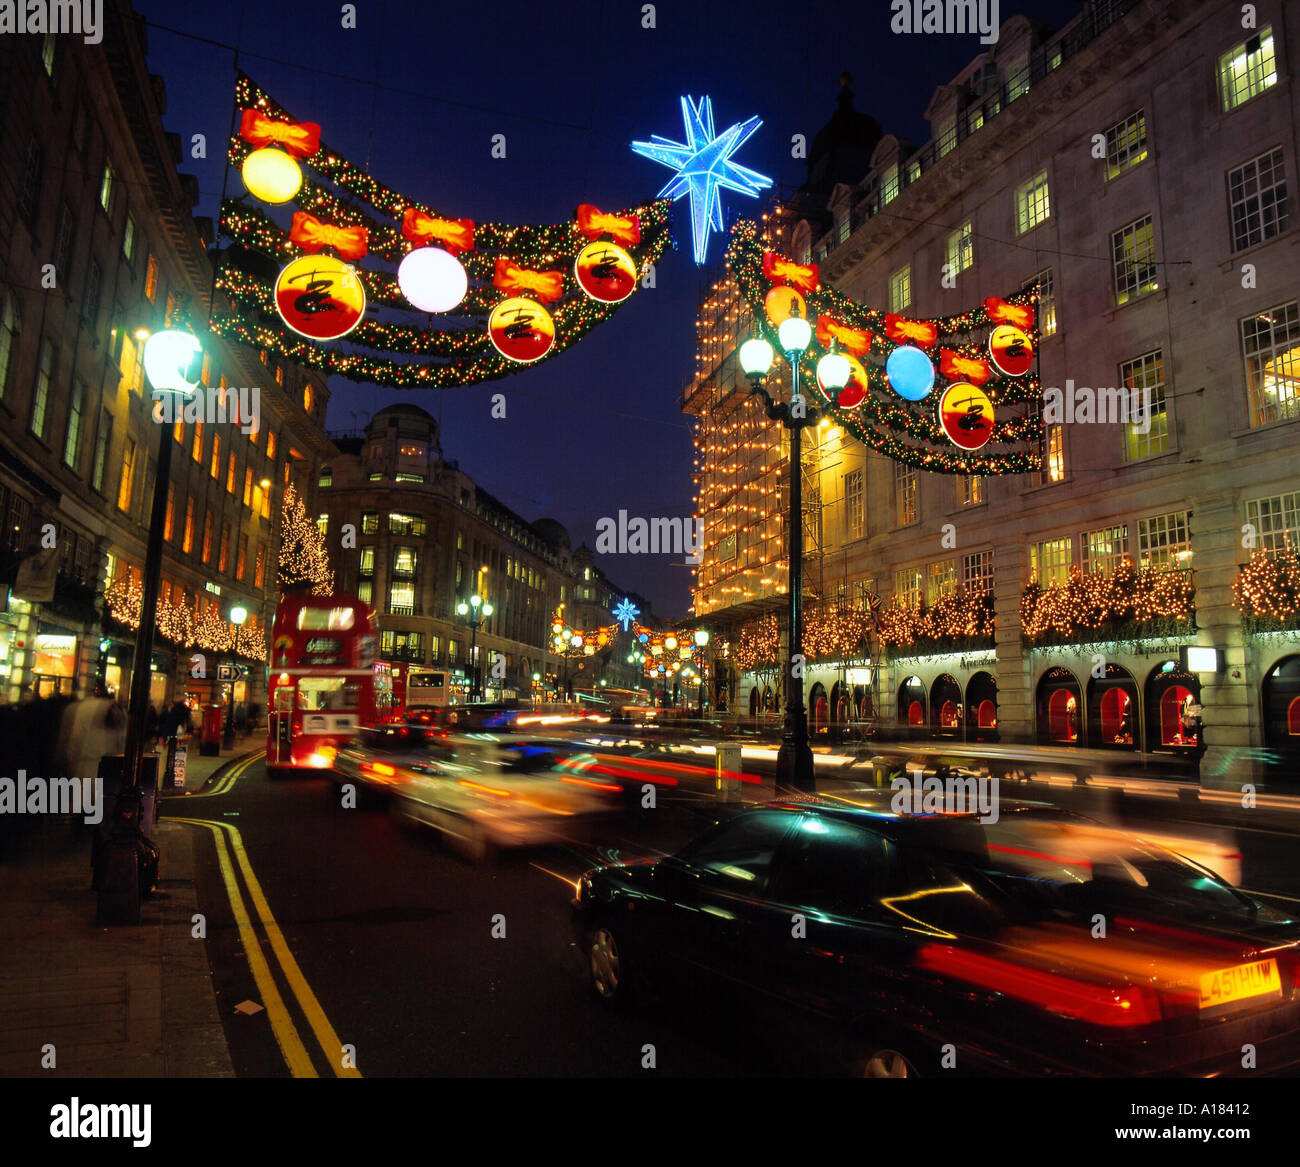 Weihnachtsschmuck in Regent Street London England UK N Blythe Stockfoto